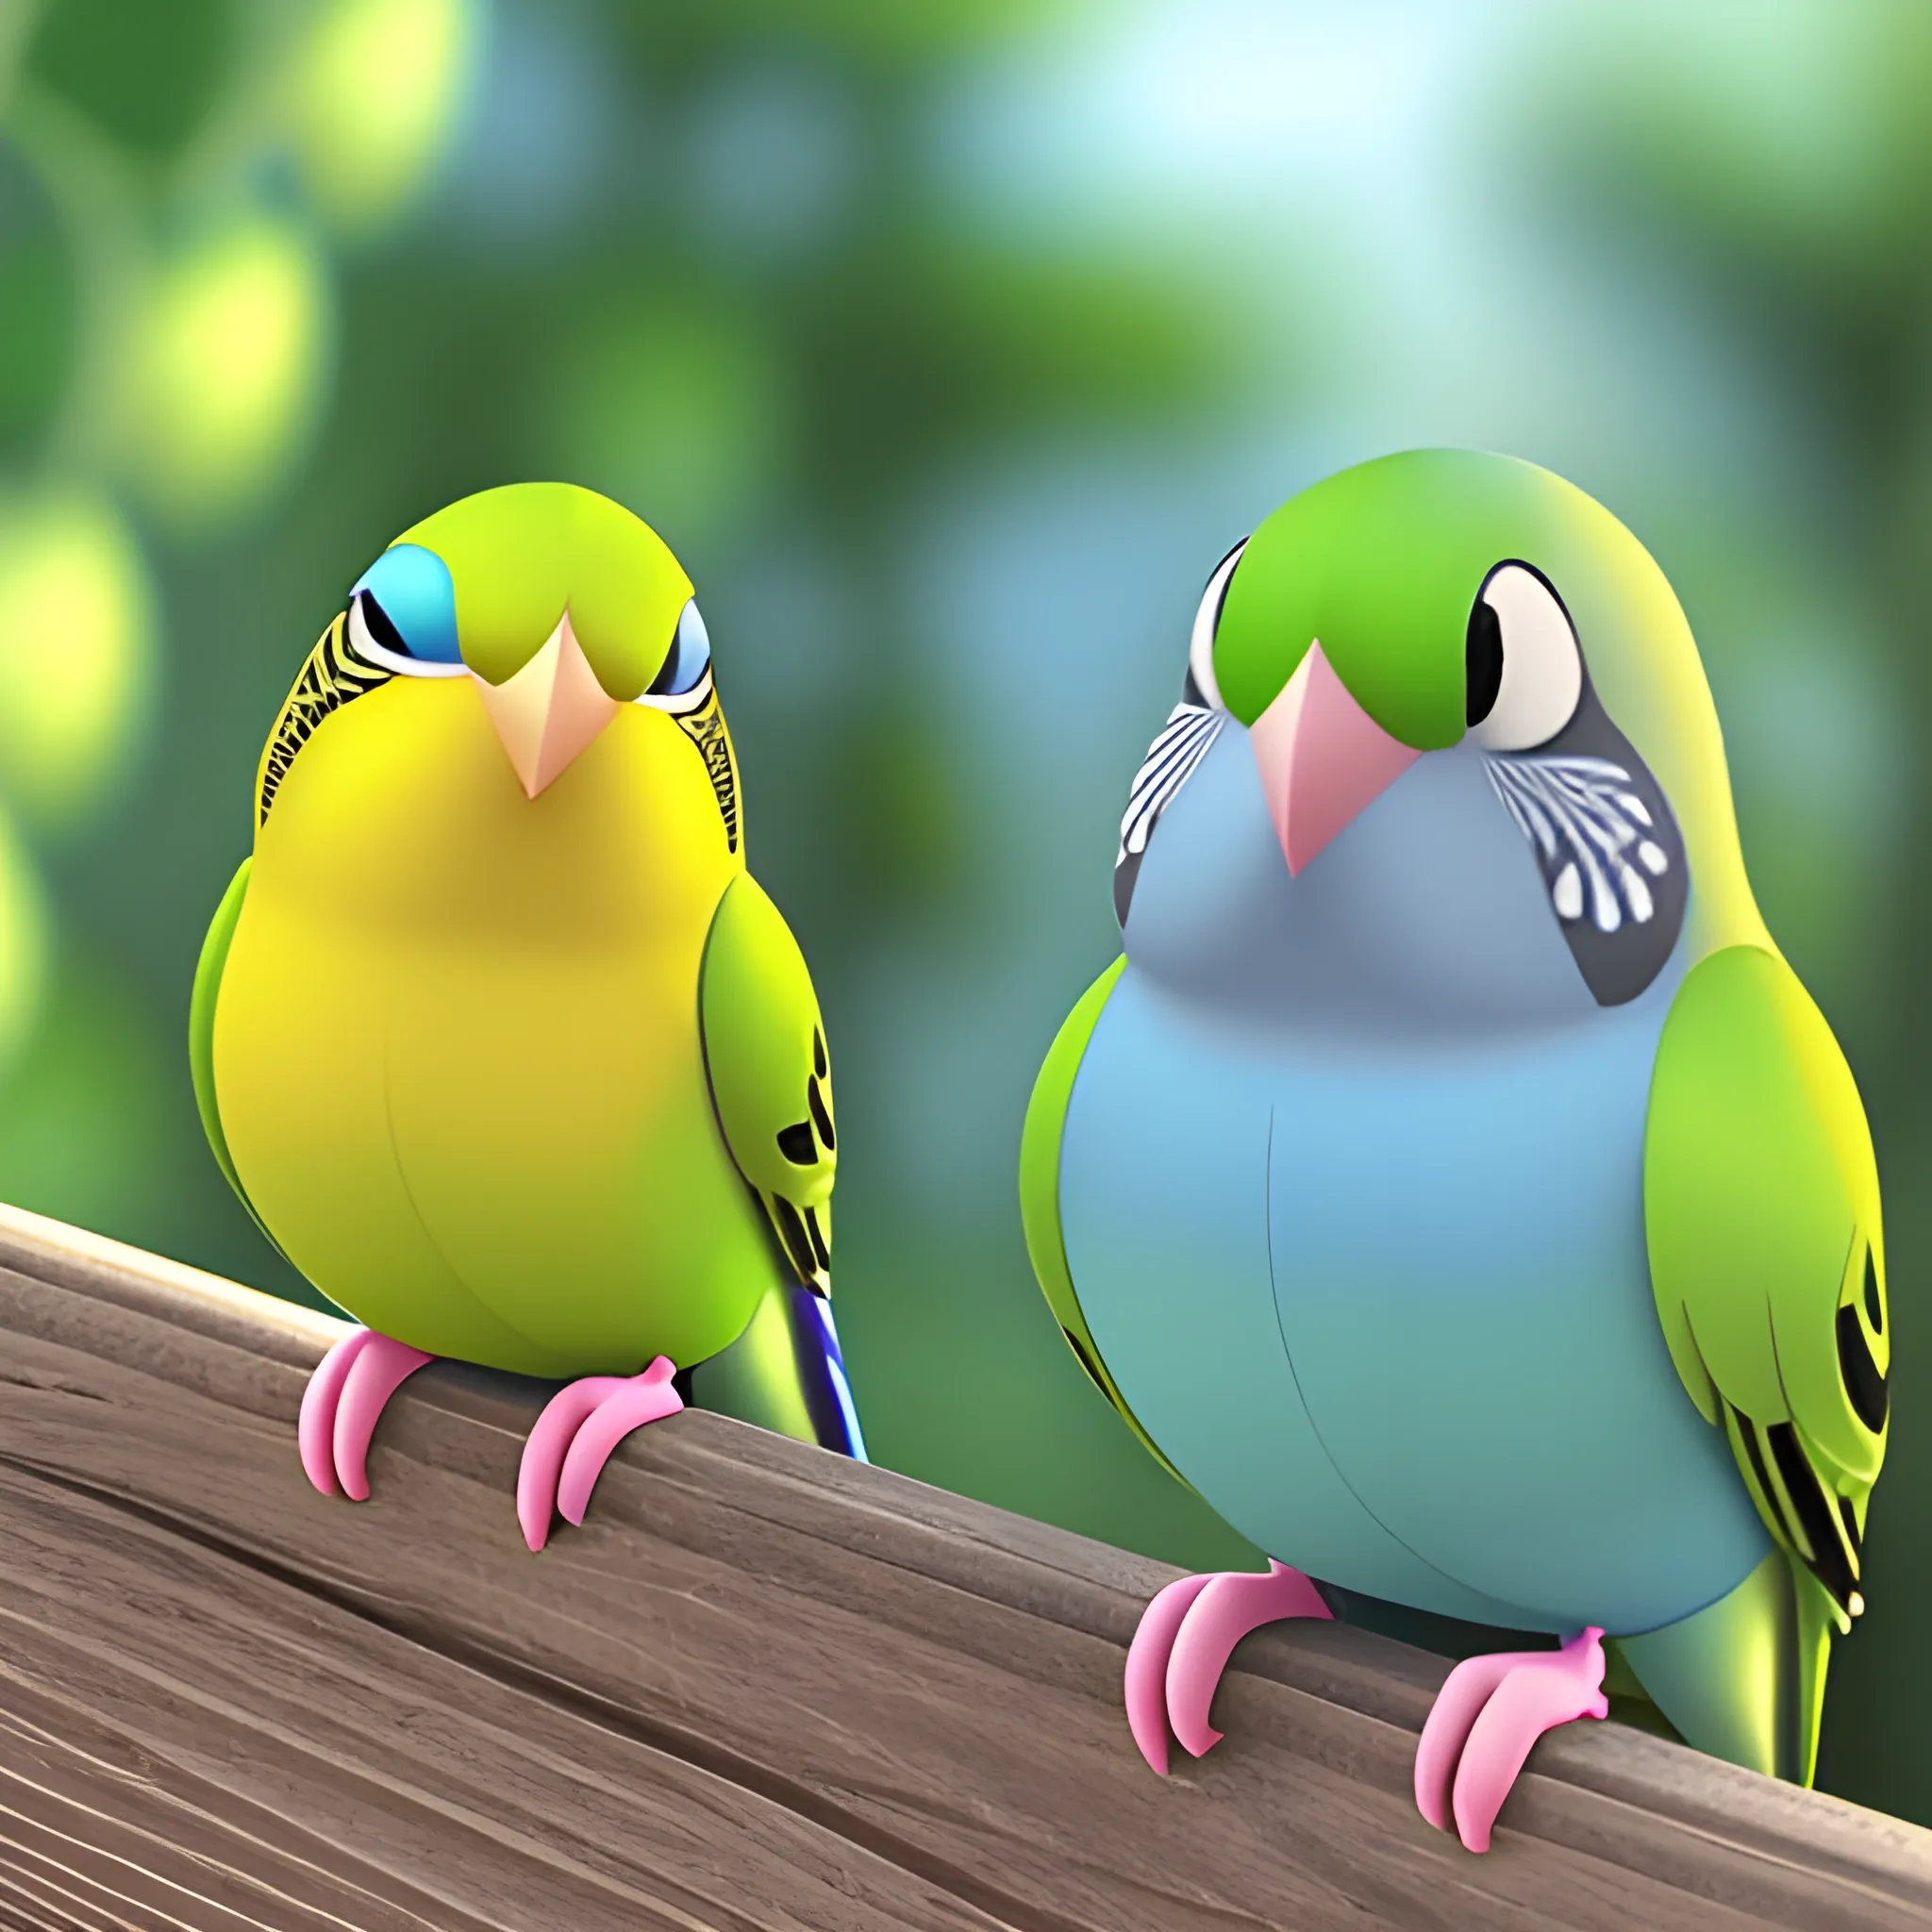 Pixar disney
, Cartoon
Green budgie
Blue budgie, 3D
Two birds